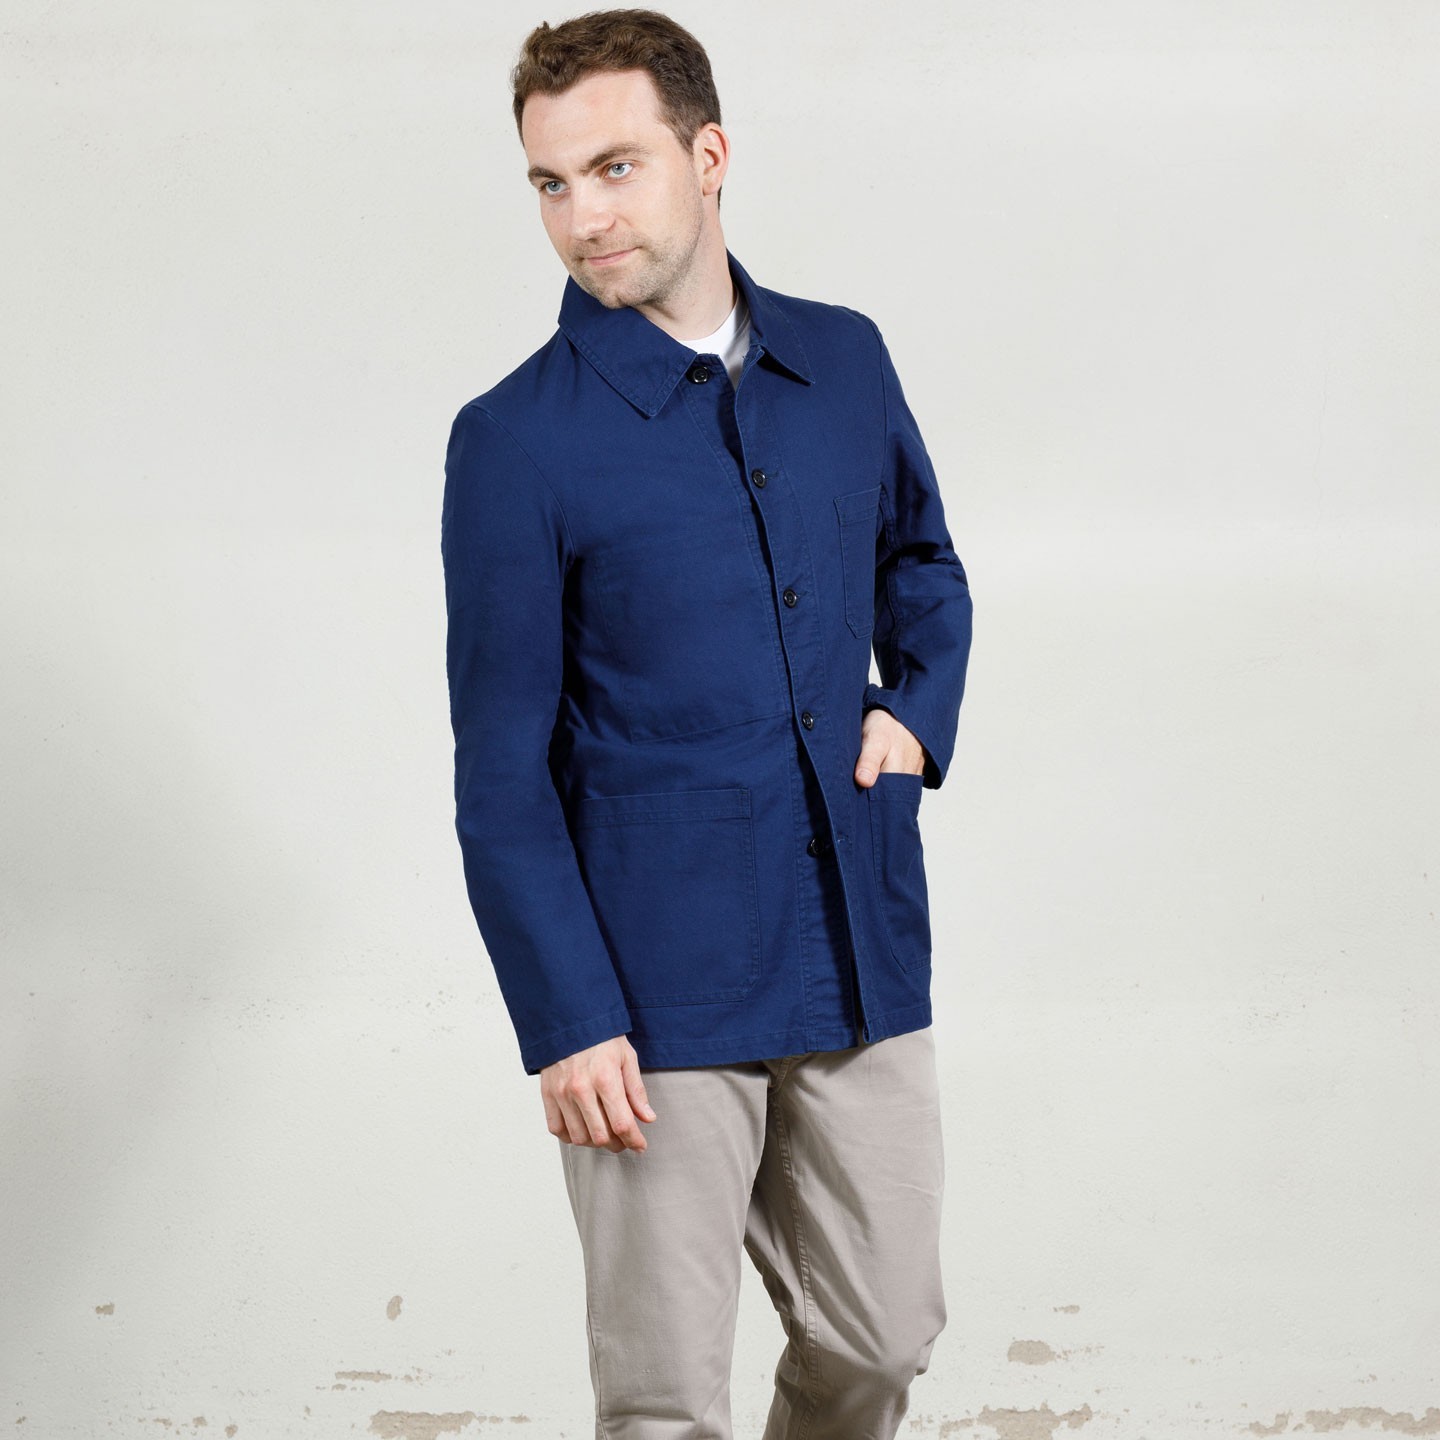 PRODUCTS: FR Cotton Shop Coat, Navy 42 Length